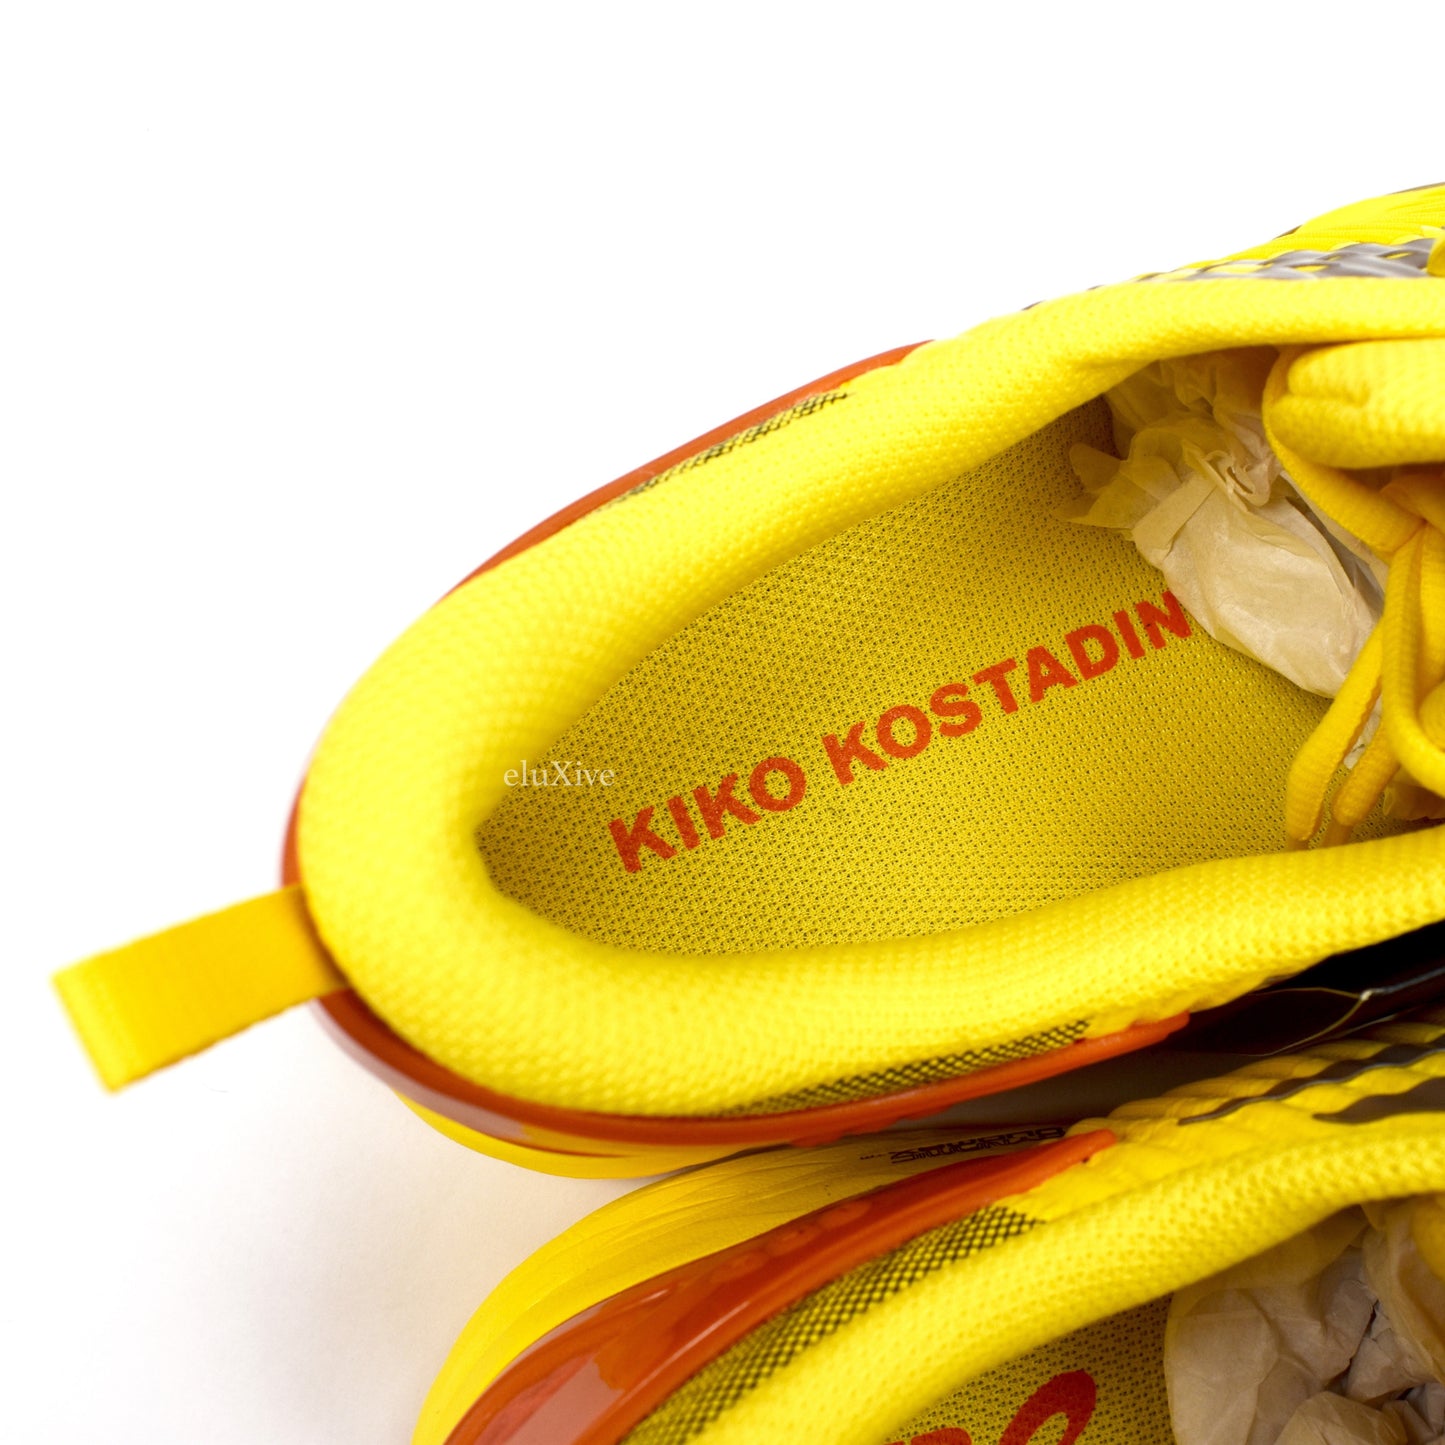 Asics x Kiko Kostadinov - Gel-Delva Sneakers (Yellow)